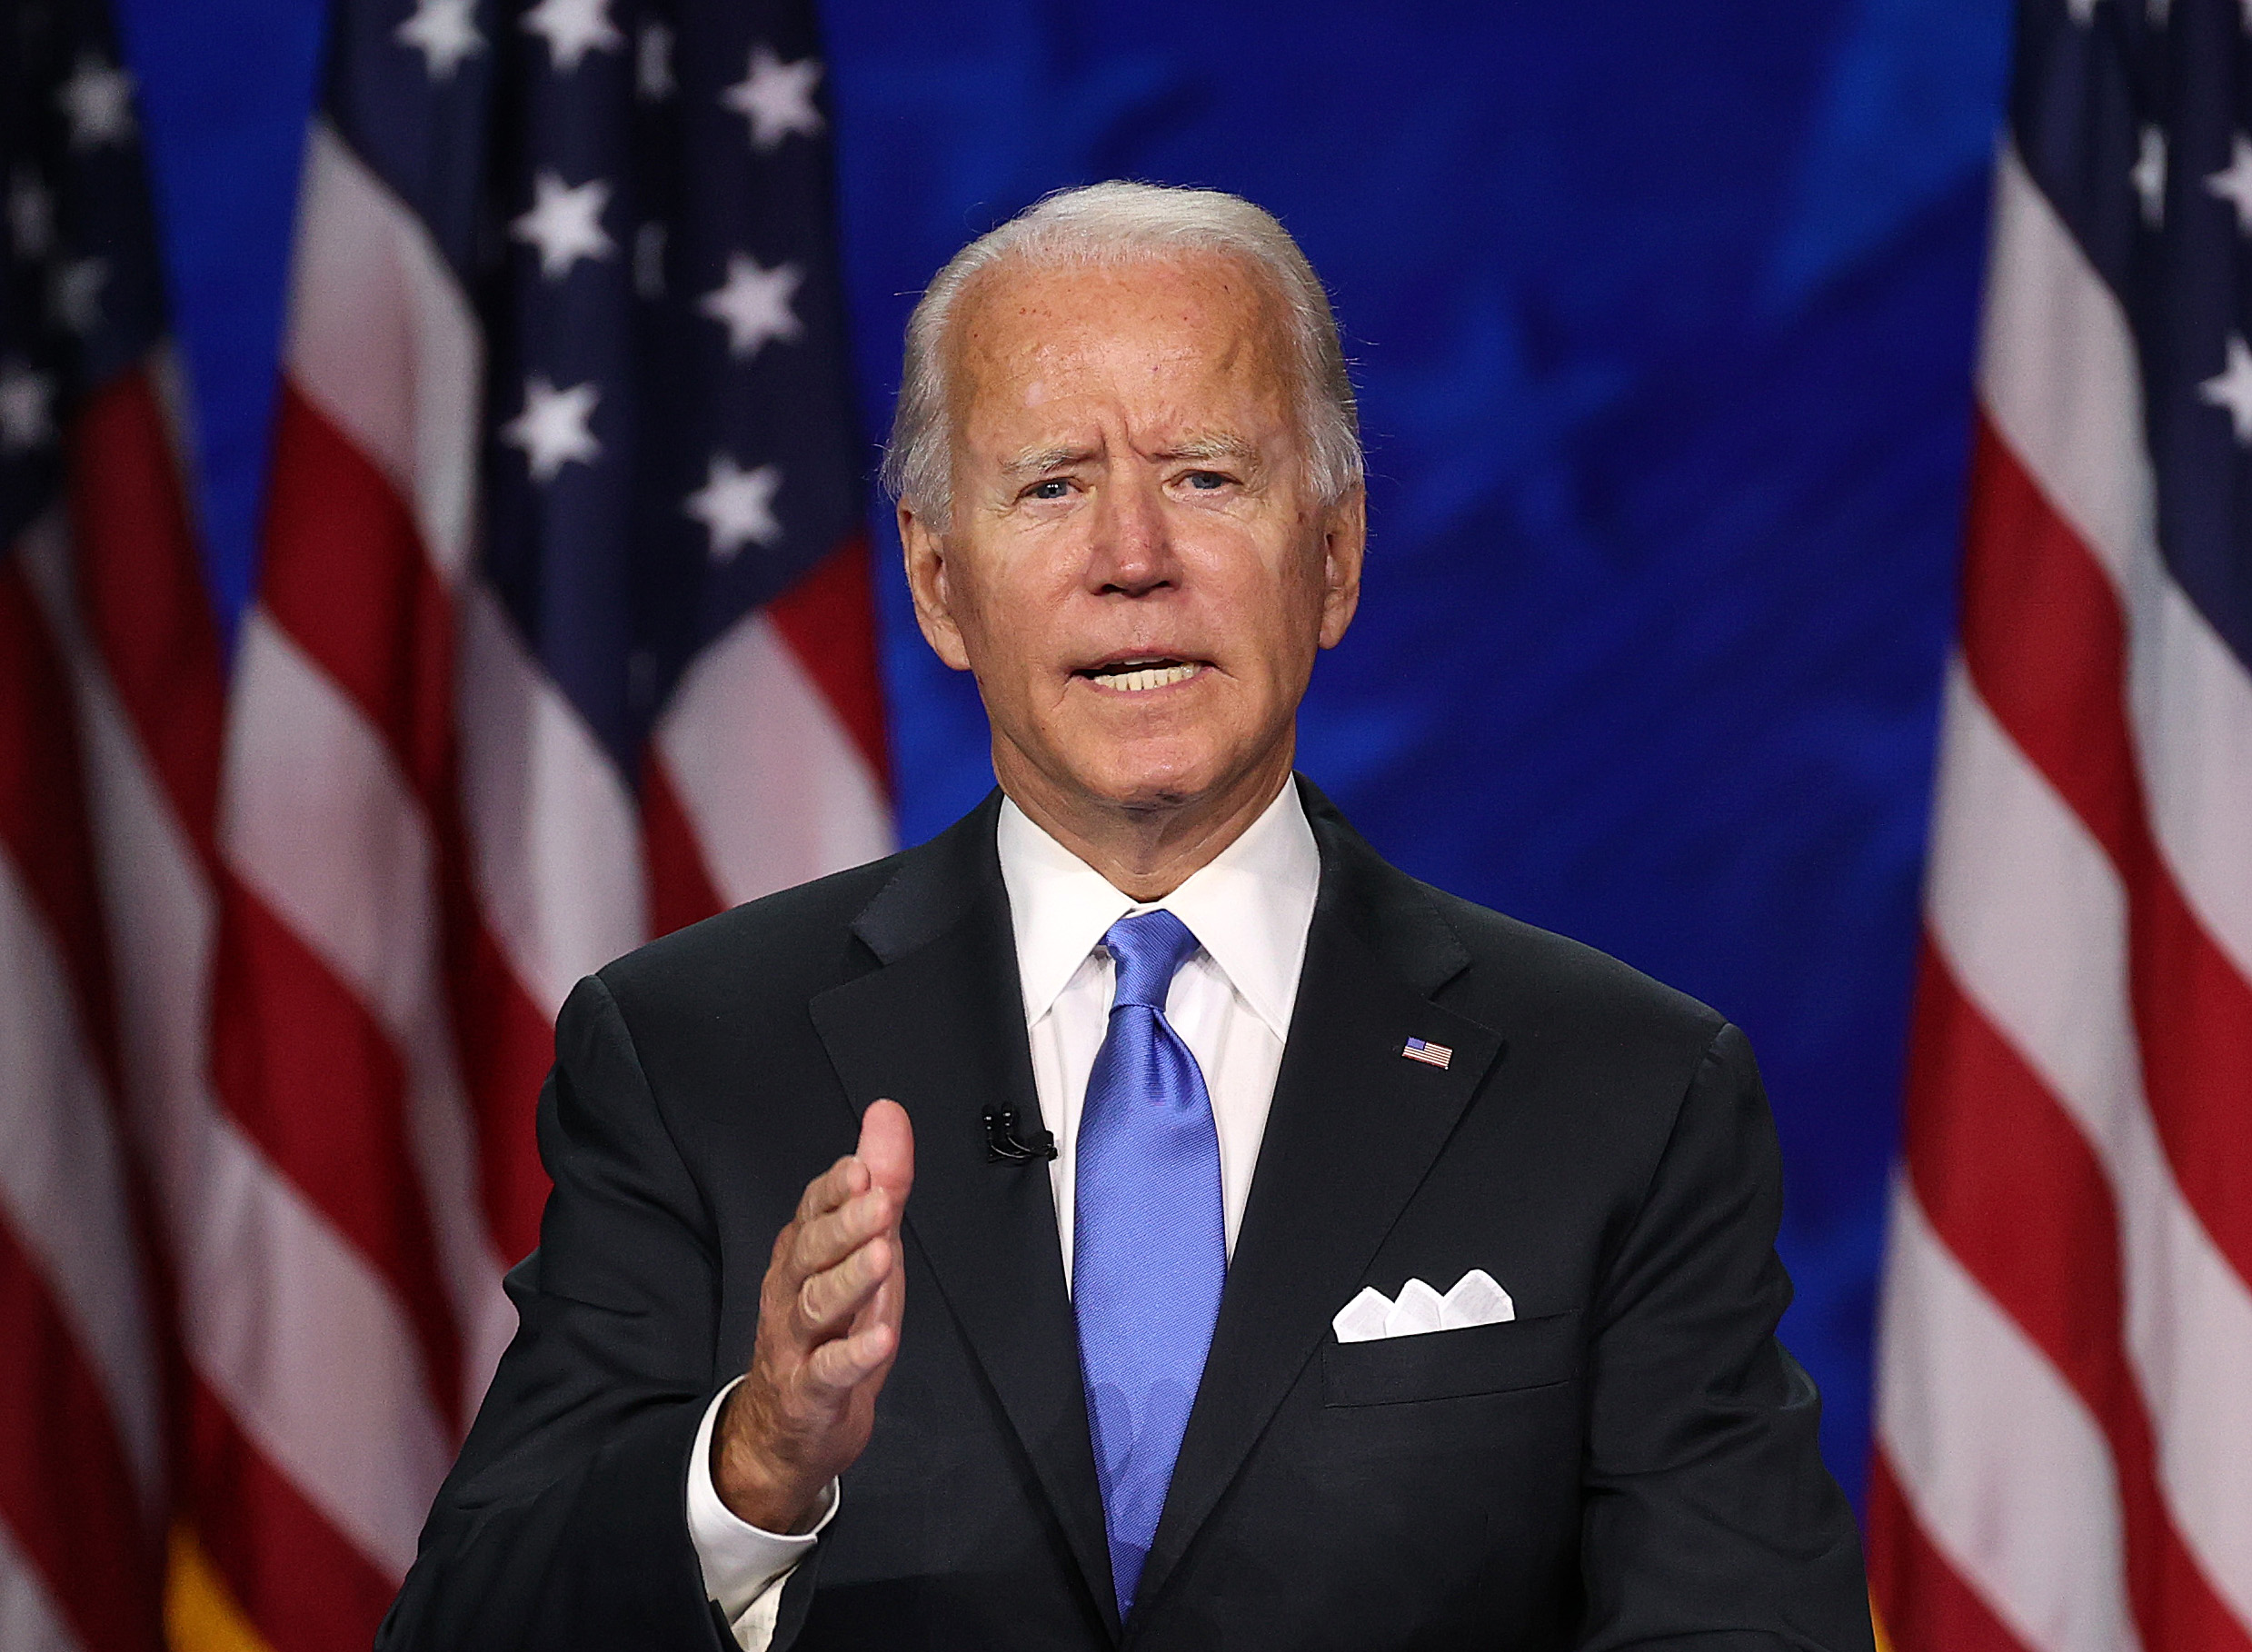 Joe Biden Says Vladimir Putin “Cannot Remain In Power,” During Scathing Speech